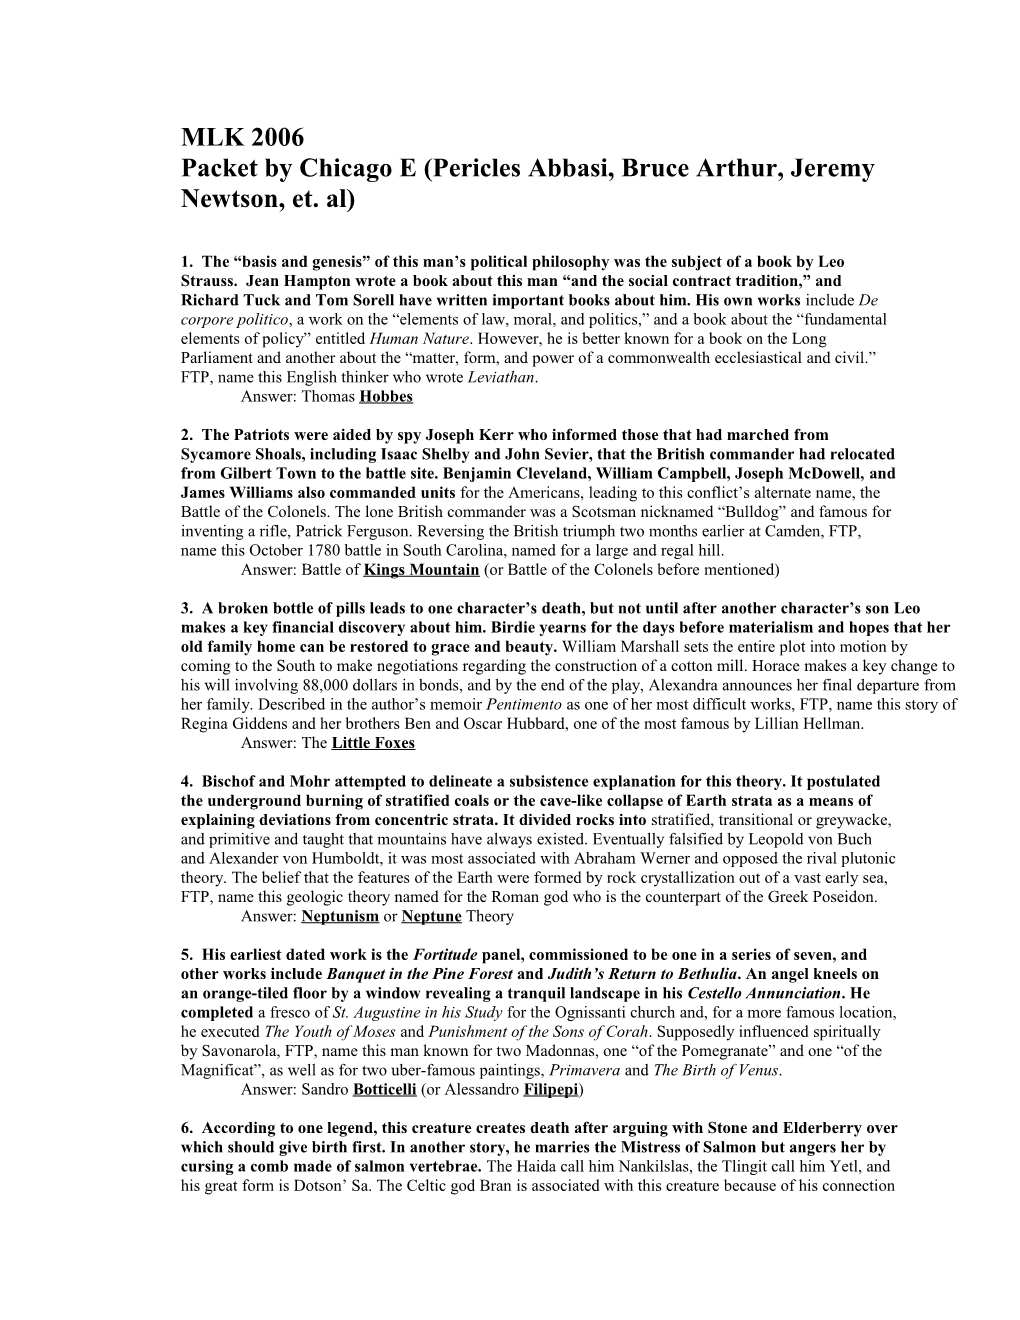 Packet by Chicago E (Pericles Abbasi, Bruce Arthur, Jeremy Newtson, Et. Al)